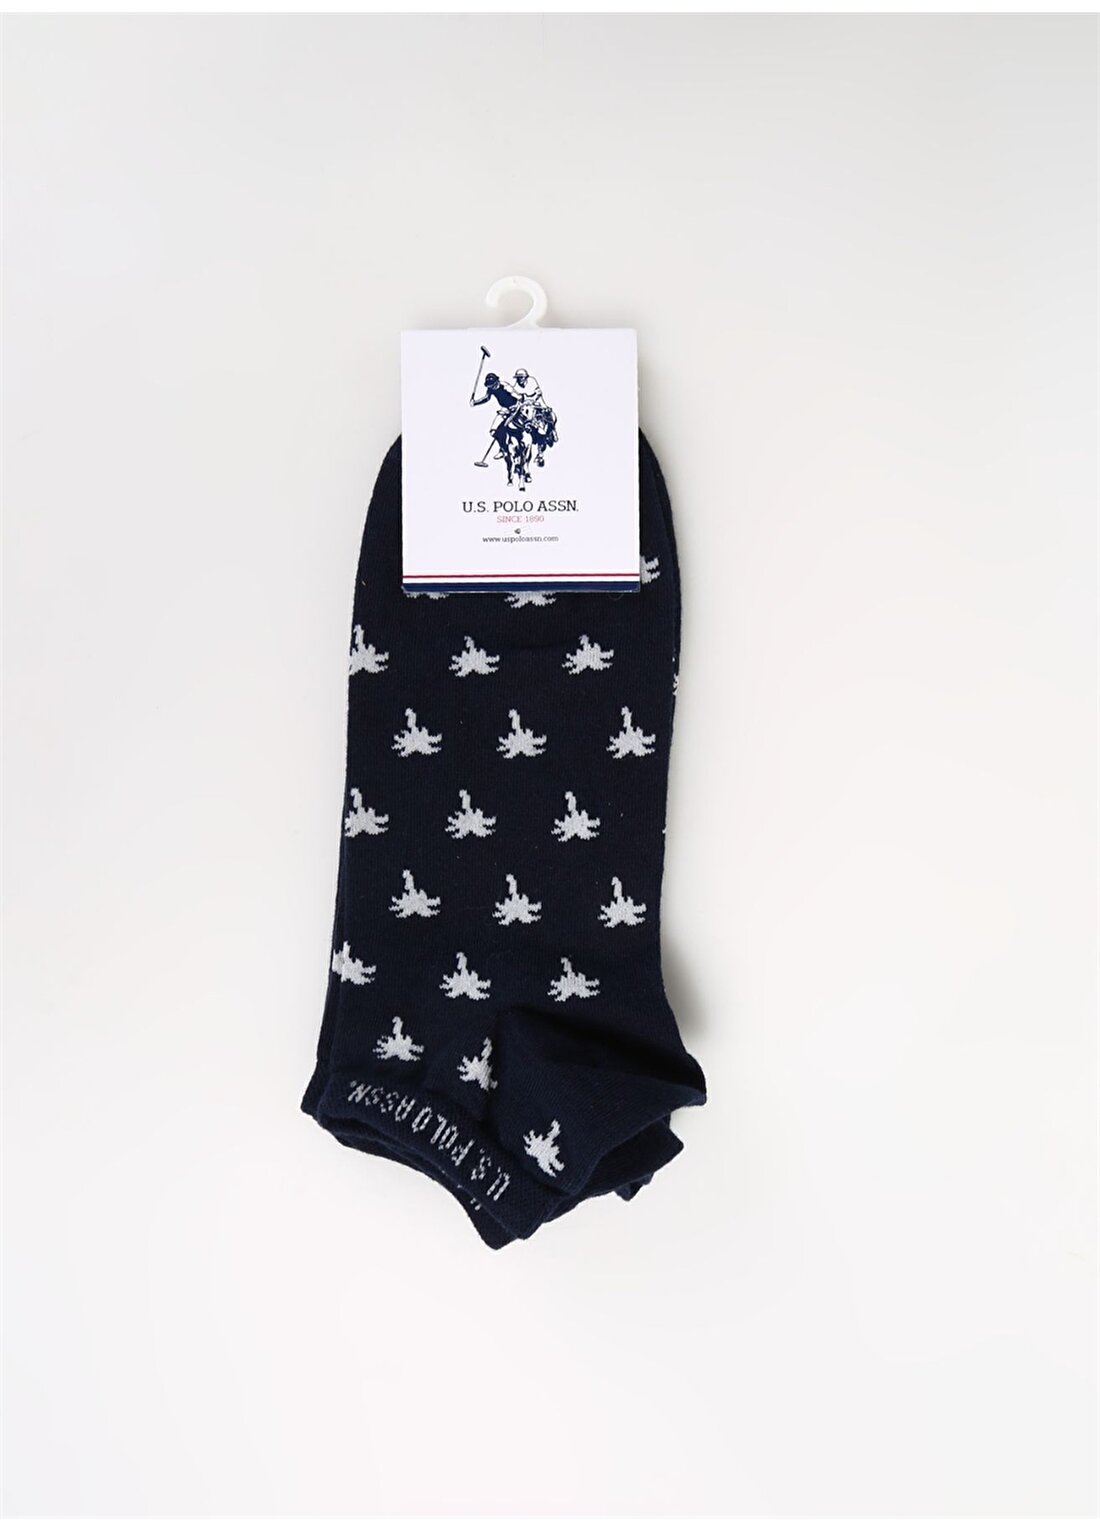 U.S. Polo Assn. Lacivert Erkek Çorap 2'LI PAKET